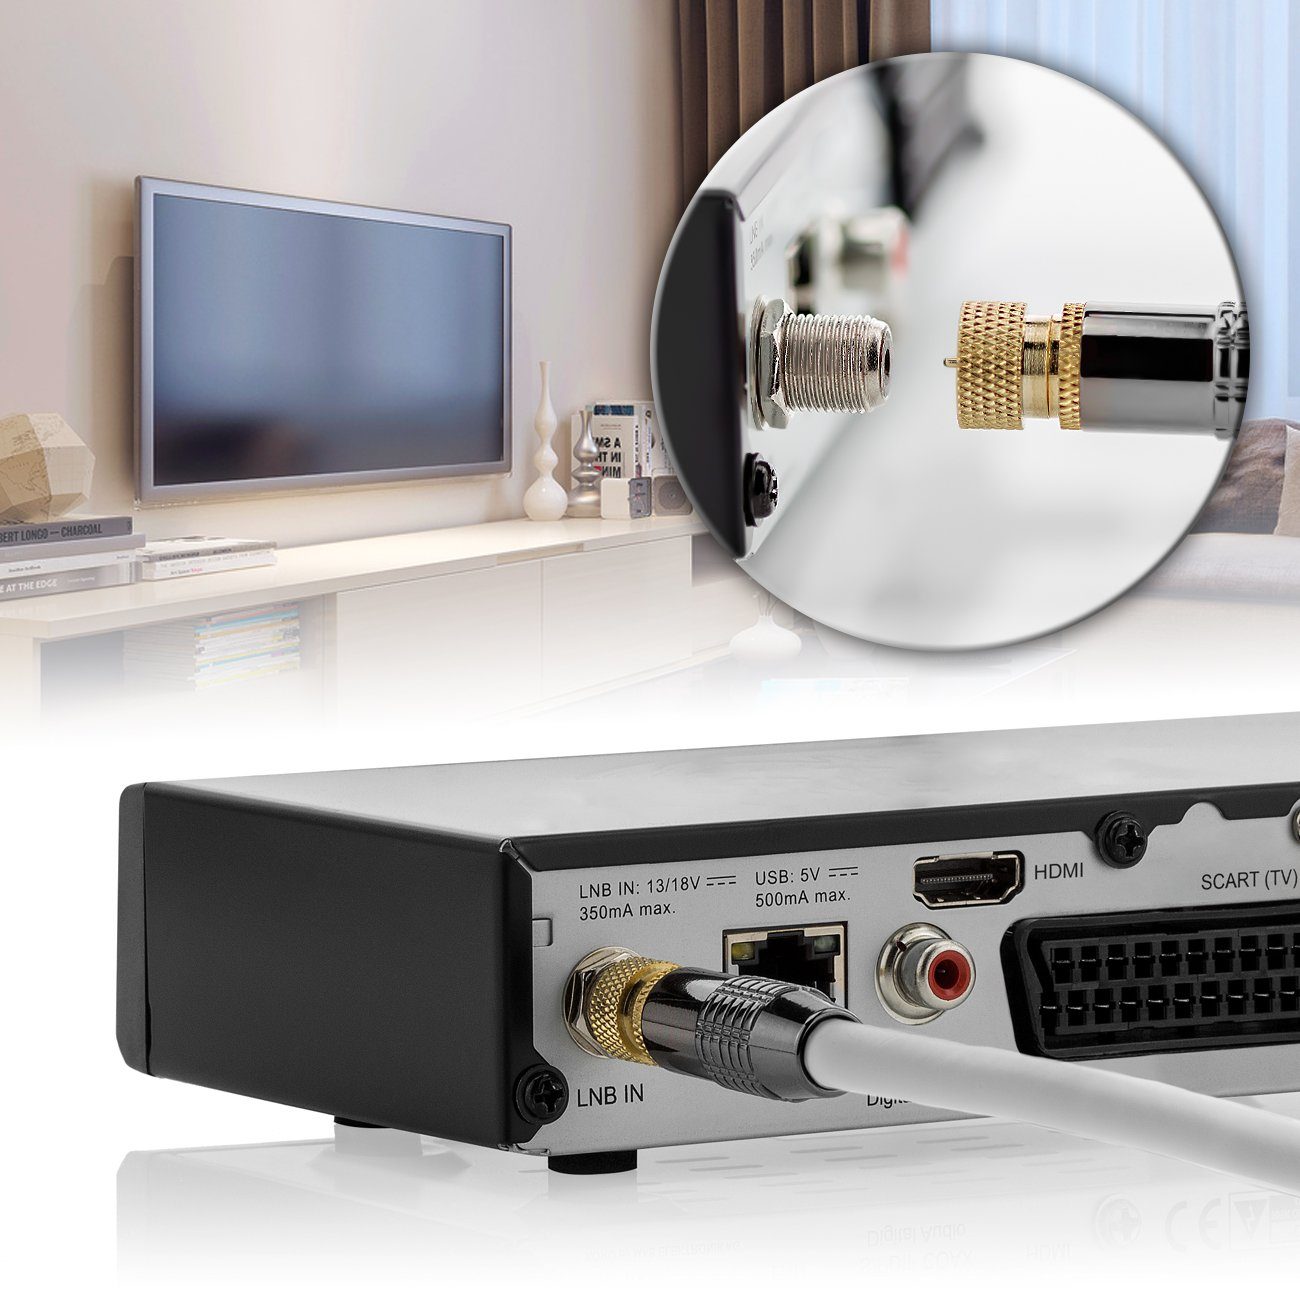 deleyCON deleyCON HDTV SAT - Kabel SAT-Kabel - vergoldet 1m METALL zu F-Stecker F-Stecker